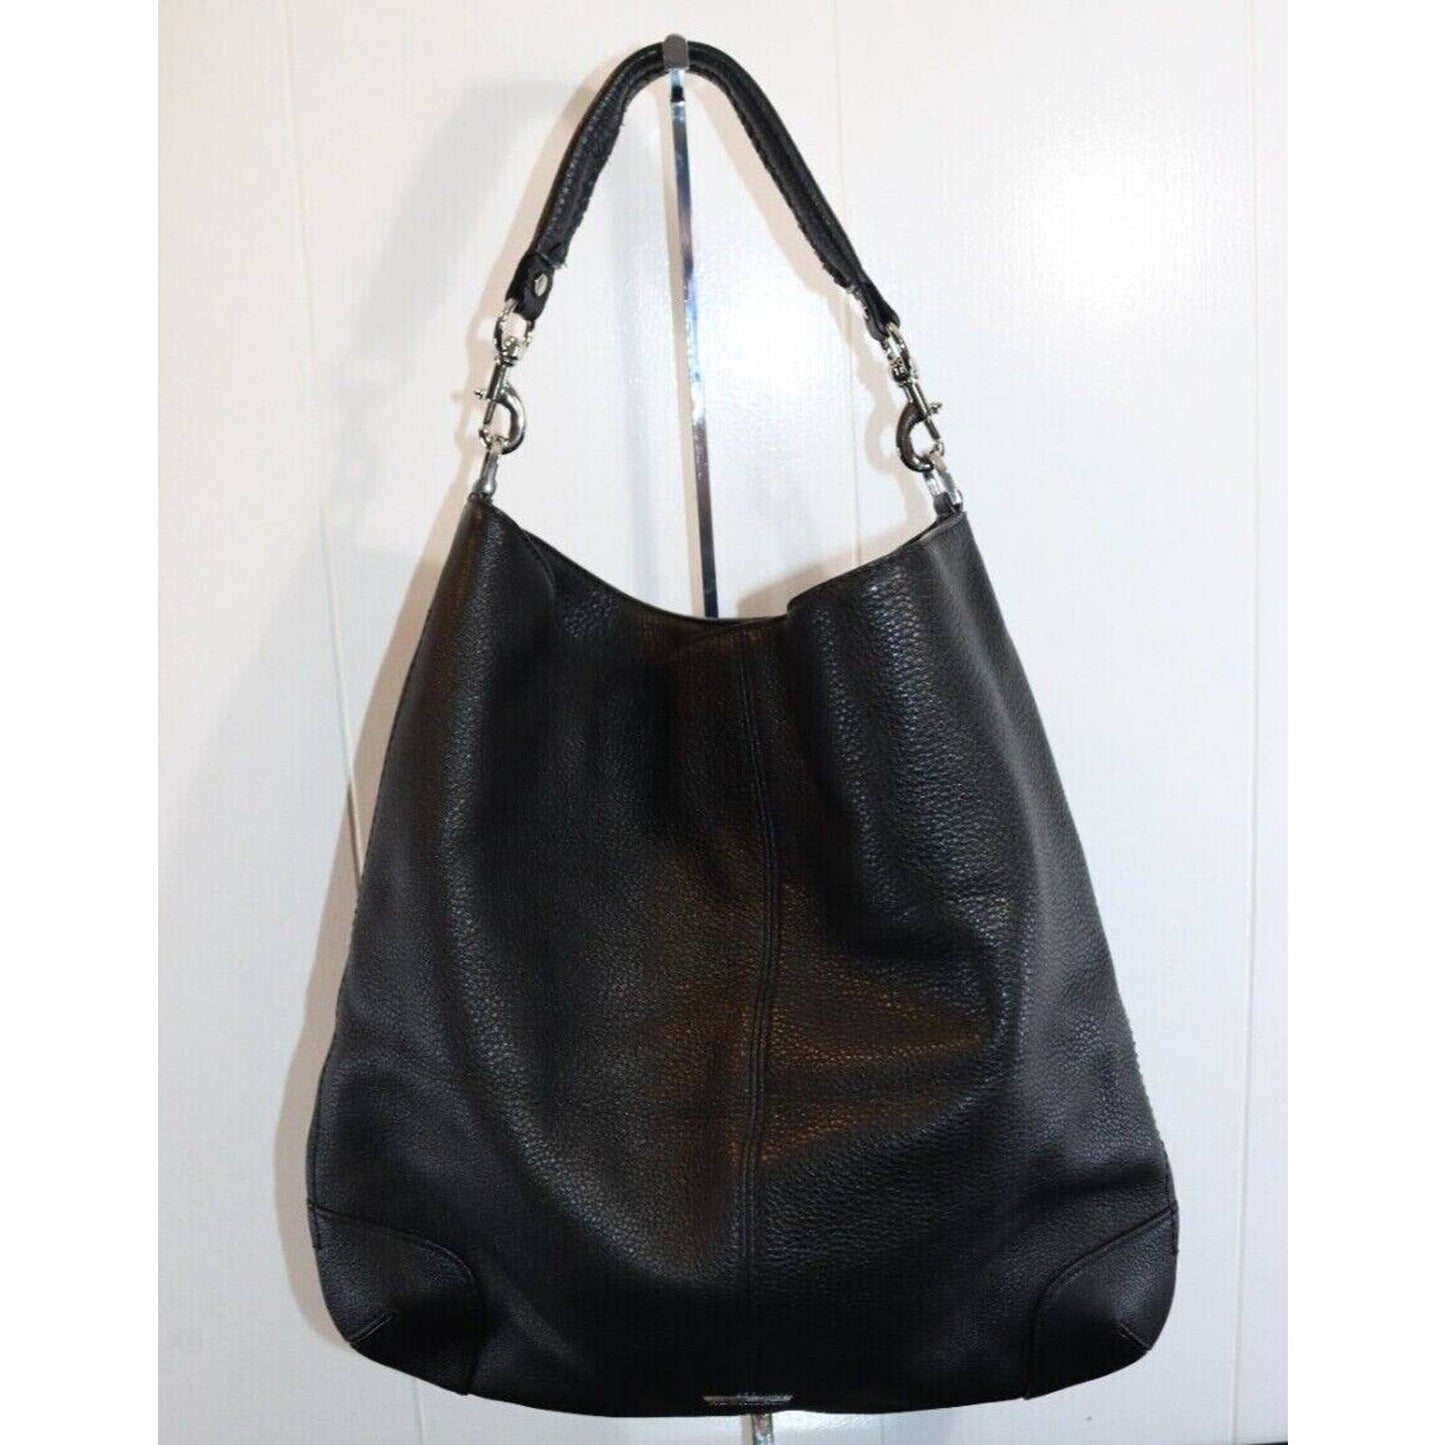 Rebecca Minkoff Black Leather Medium Pebble Hobo Bag